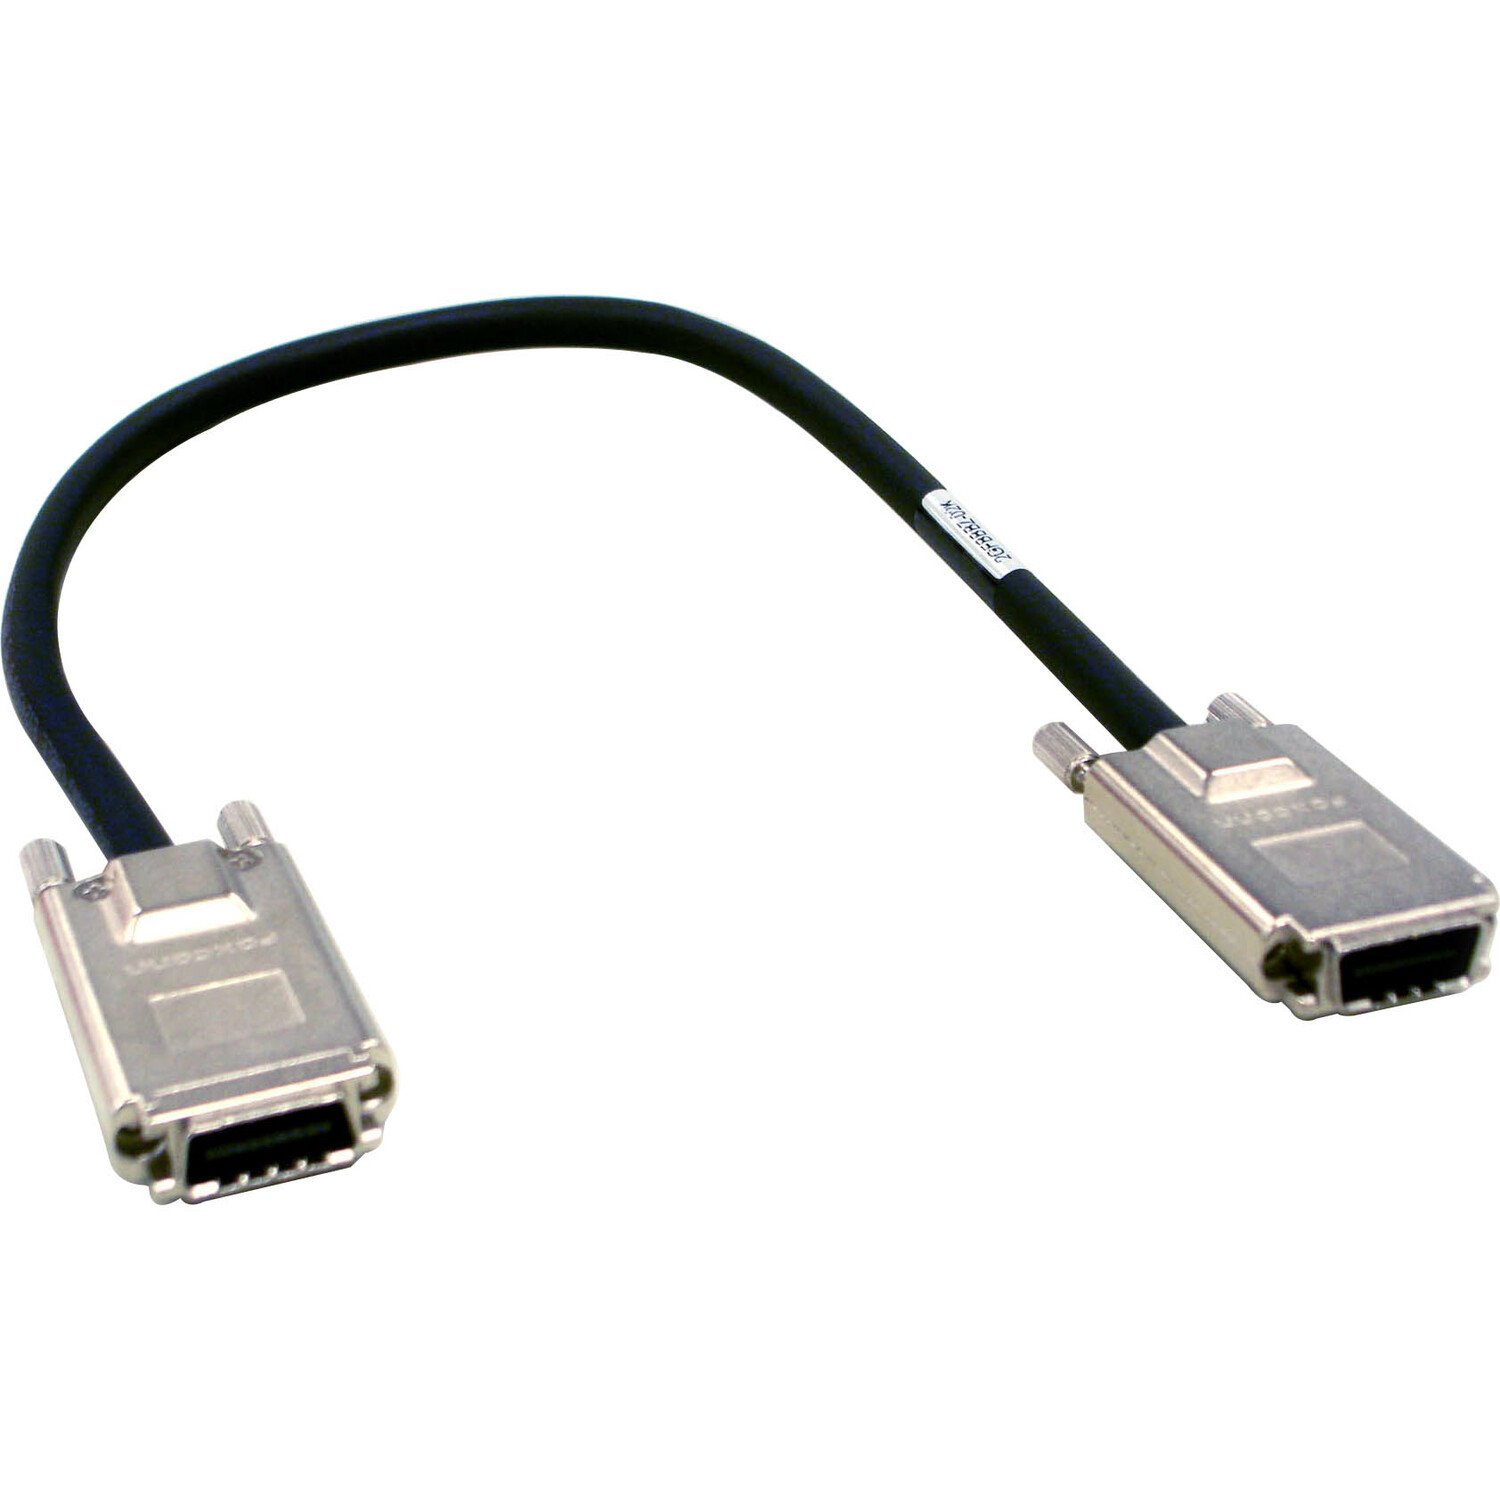 D-Link DEM-CB50 50 cm Data Transfer Cable